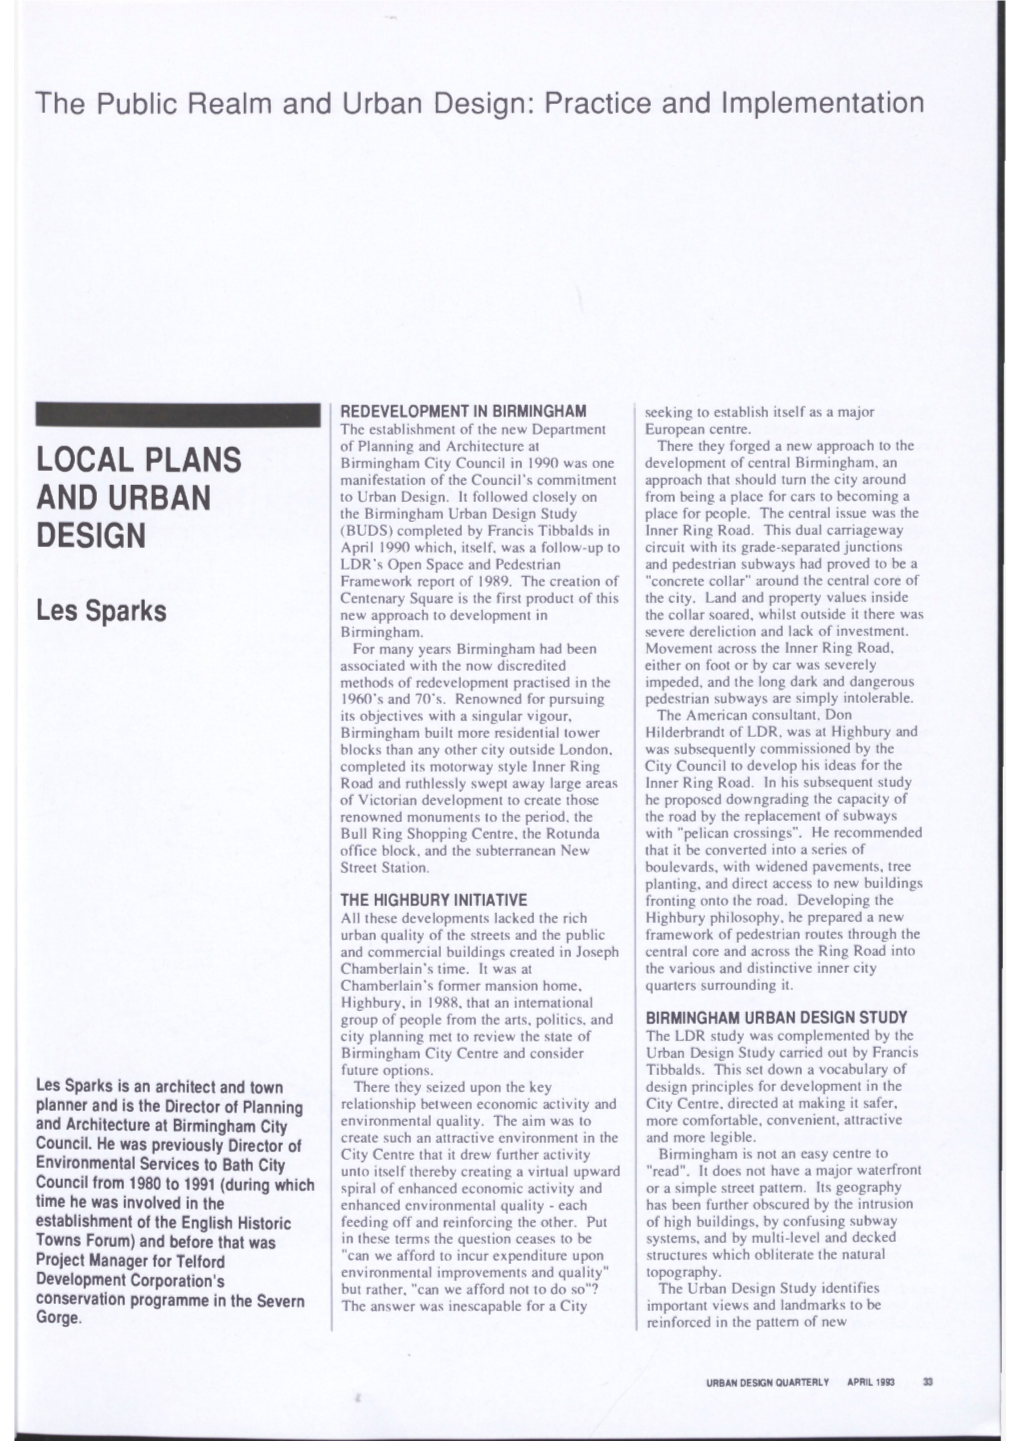 Local Plans and Urban Design